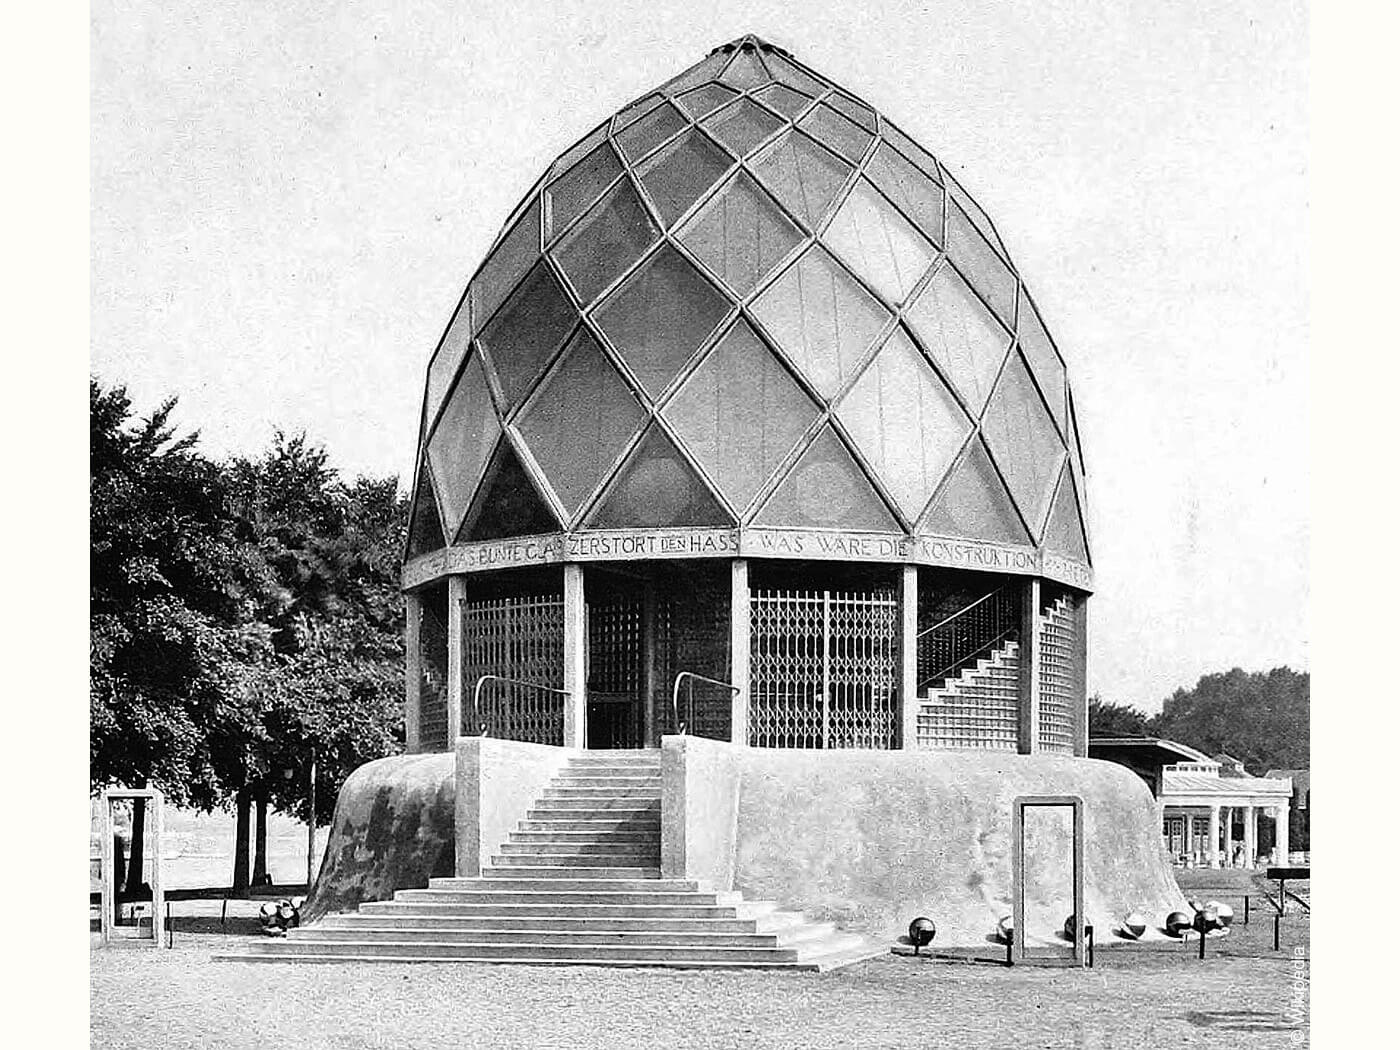 Bruno-Taut-Pavillon, Geometrie des Glashauses von 1914